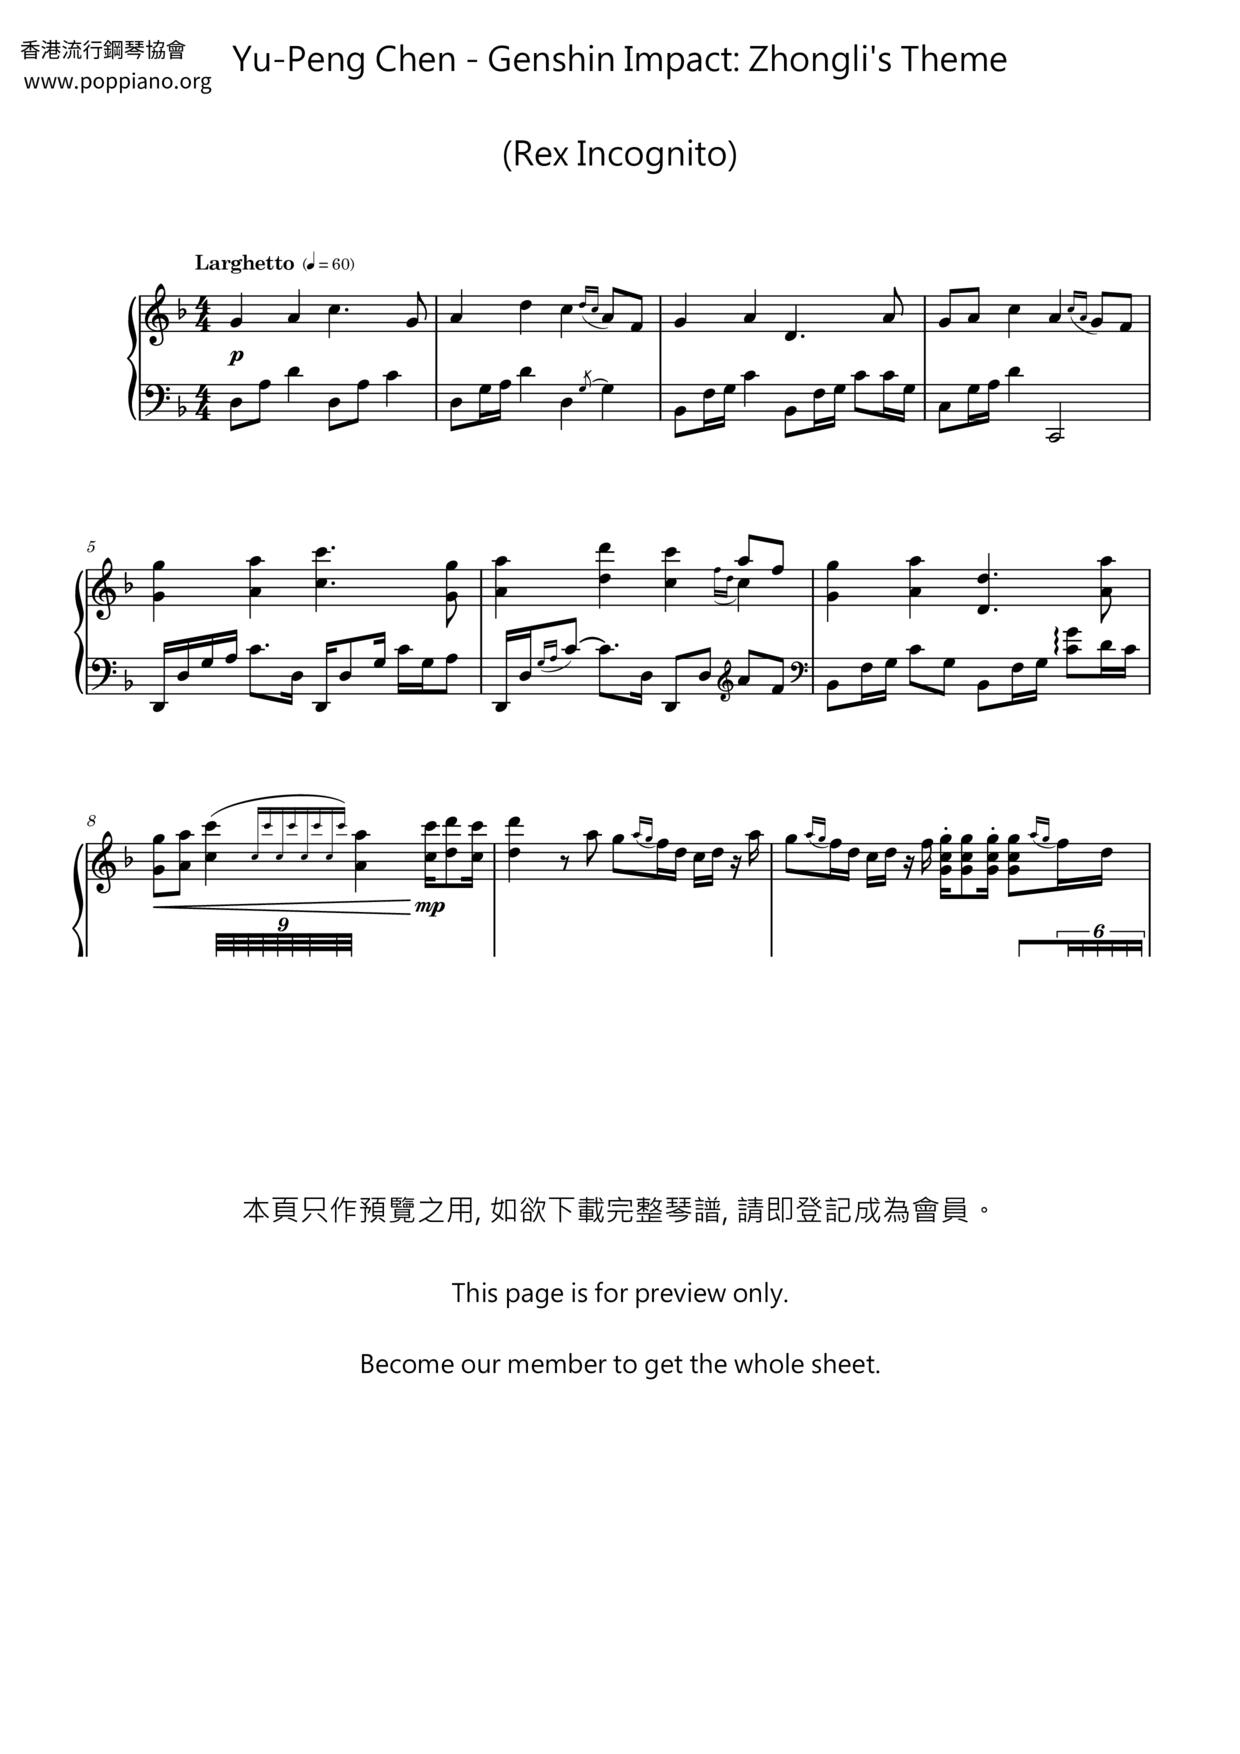 Genshin Impact: Zhongli's Theme (Rex Incognito)ピアノ譜